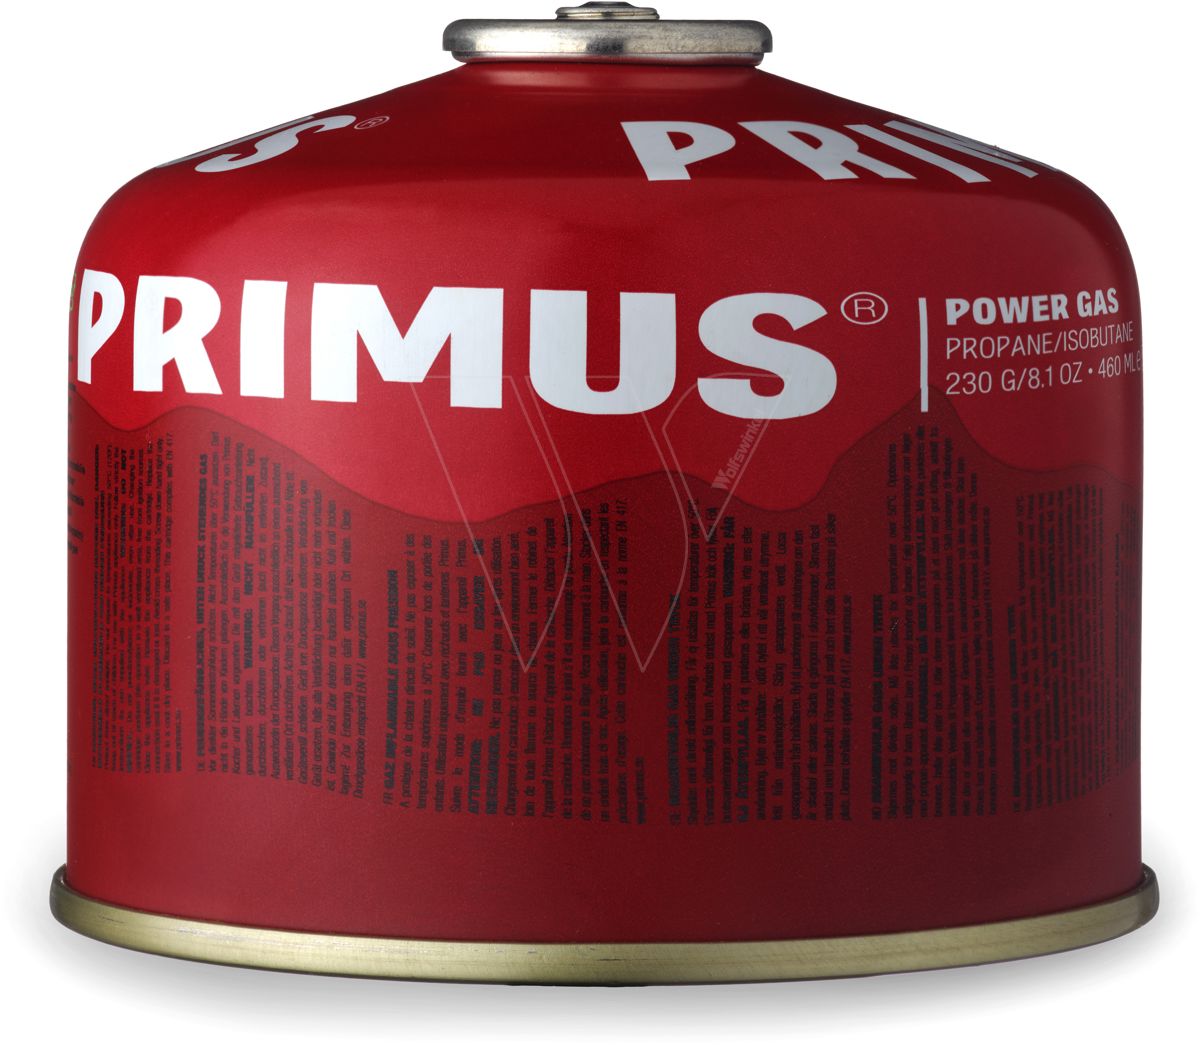 Primus power gas 230g